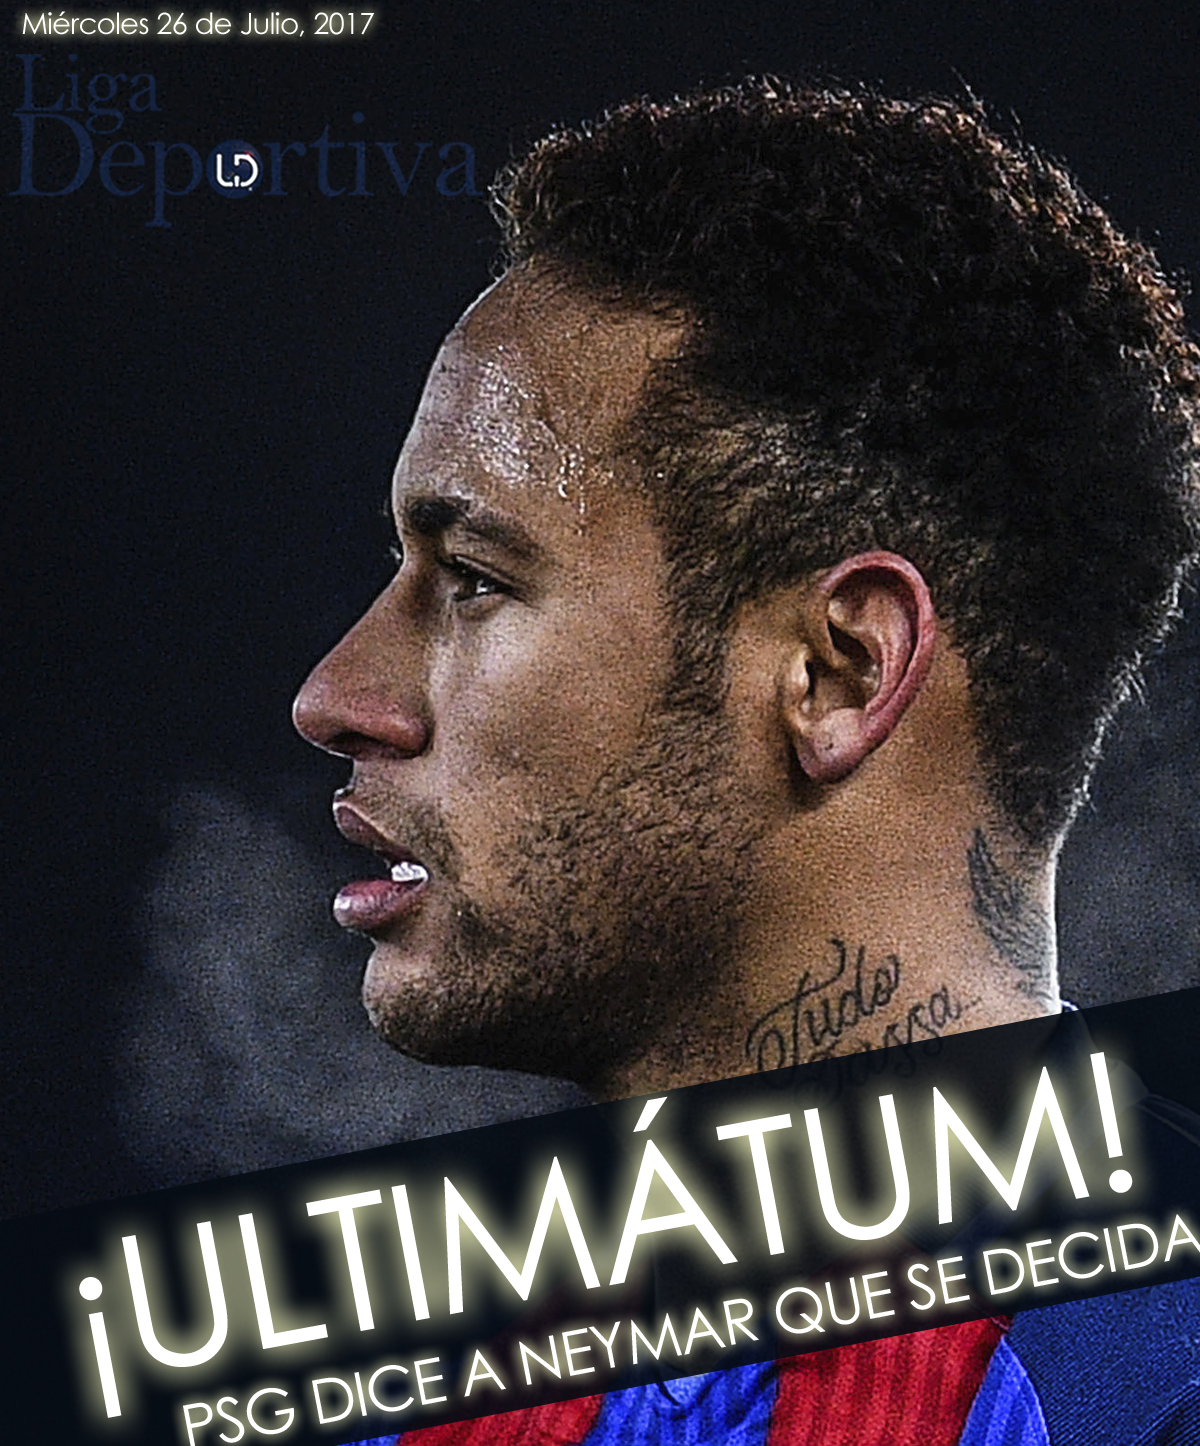 ¡ULTIMÁTUM! PSG dice a Neymar que se decida 